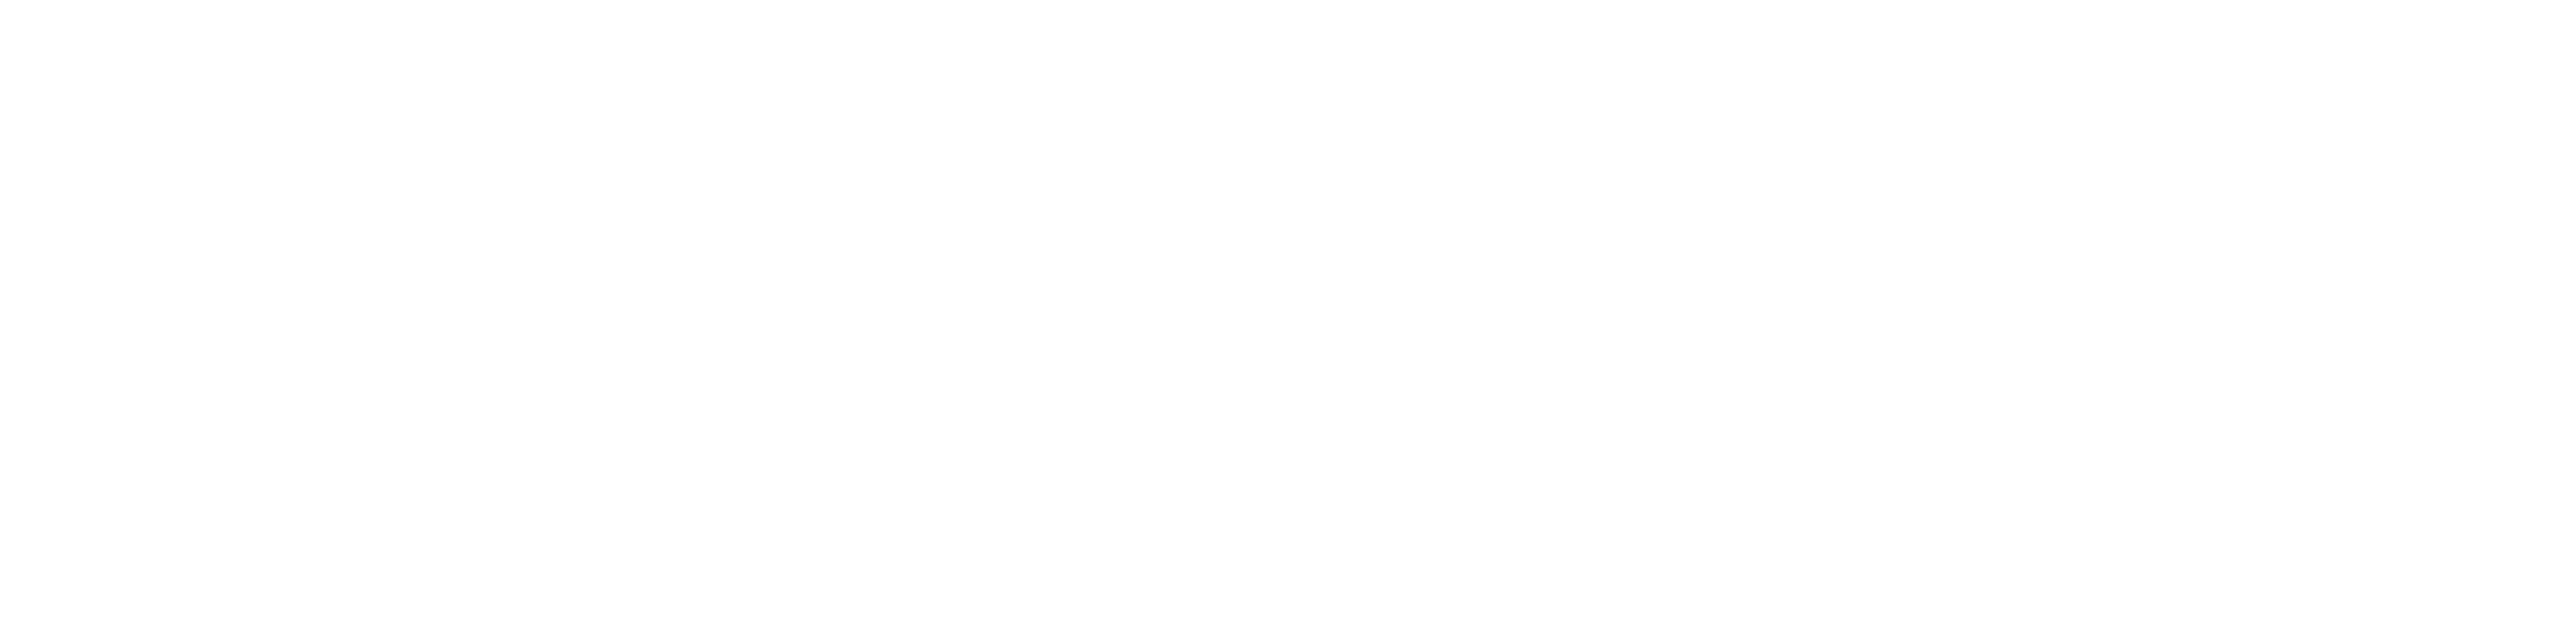 Båstad Tourism & Business Negative logo-42